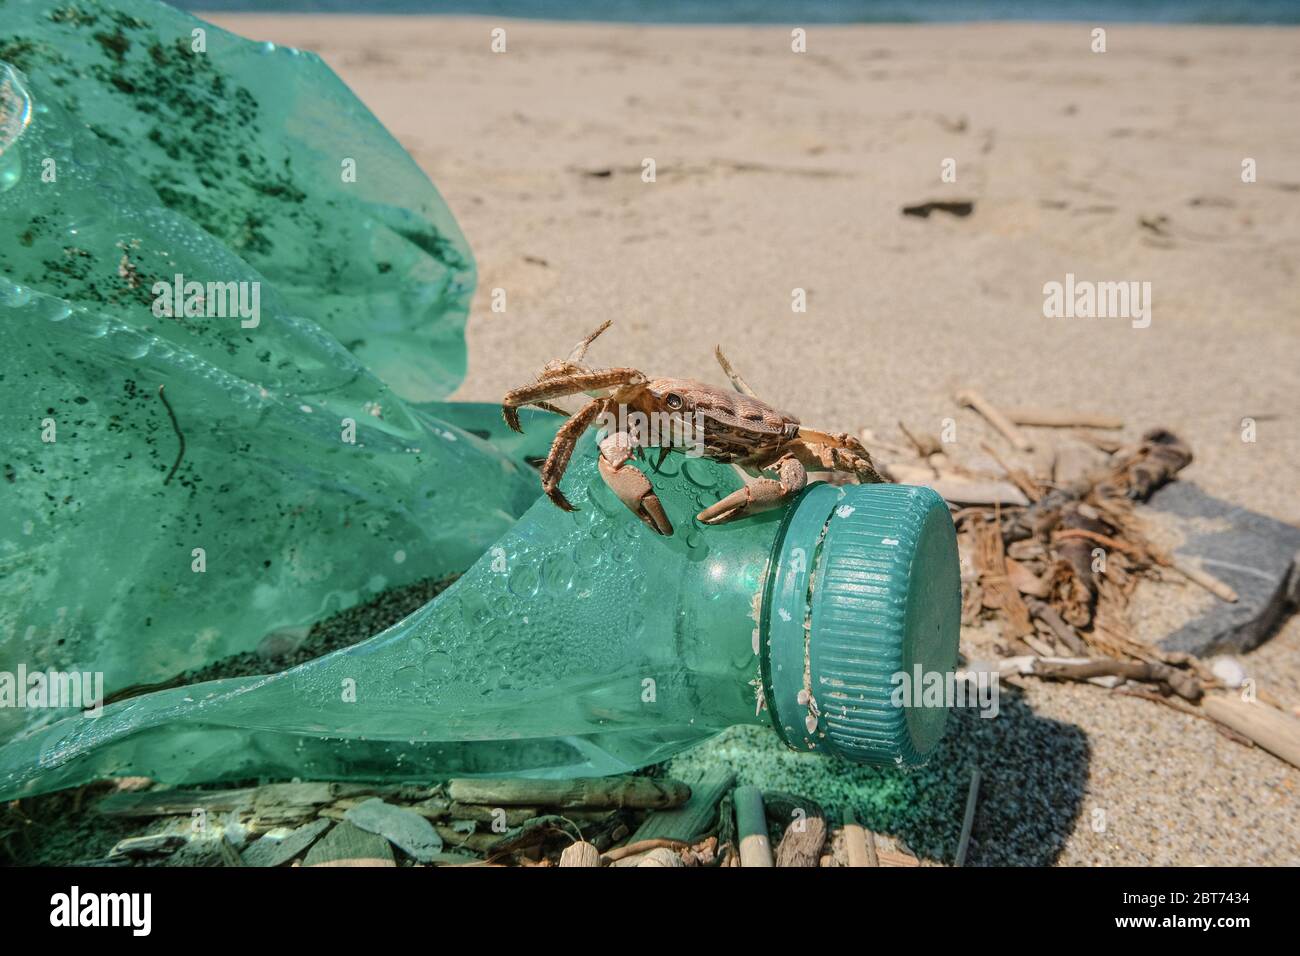 Marine crab on discharged plastic bottle on polluted sandy sea coast habitat Stock Photo